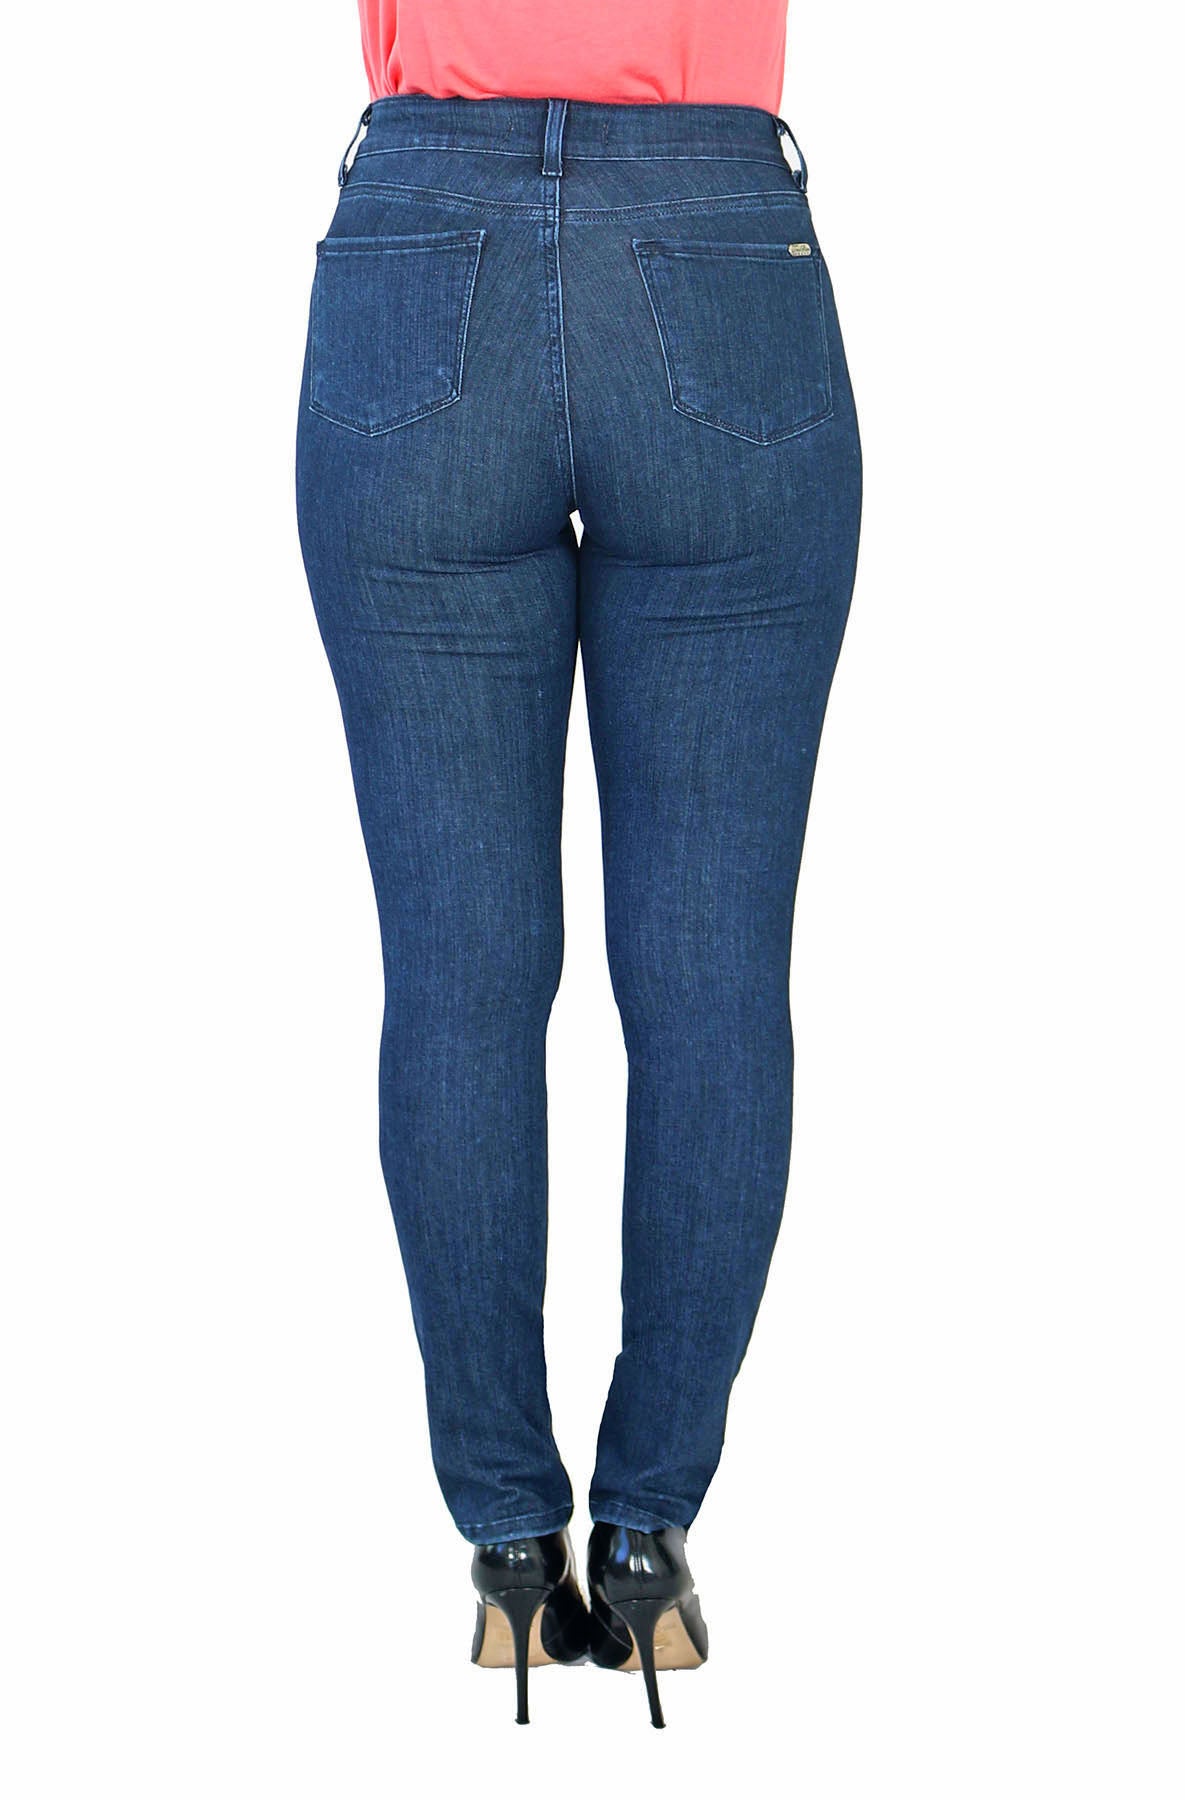 TrueSlim™ Indigo Rayon Skinny Jeans